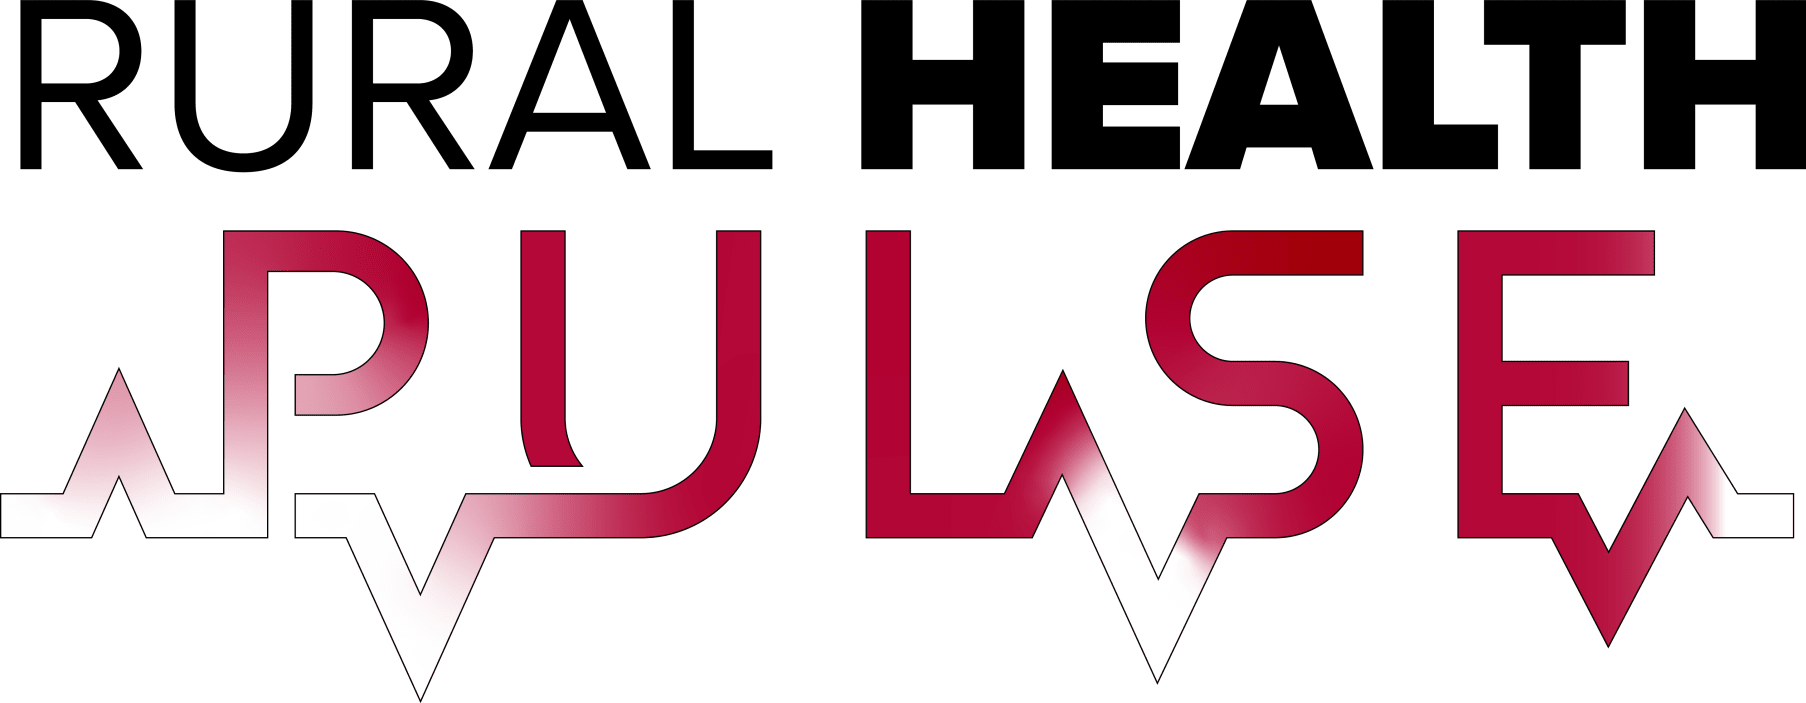 rural health pulse logo